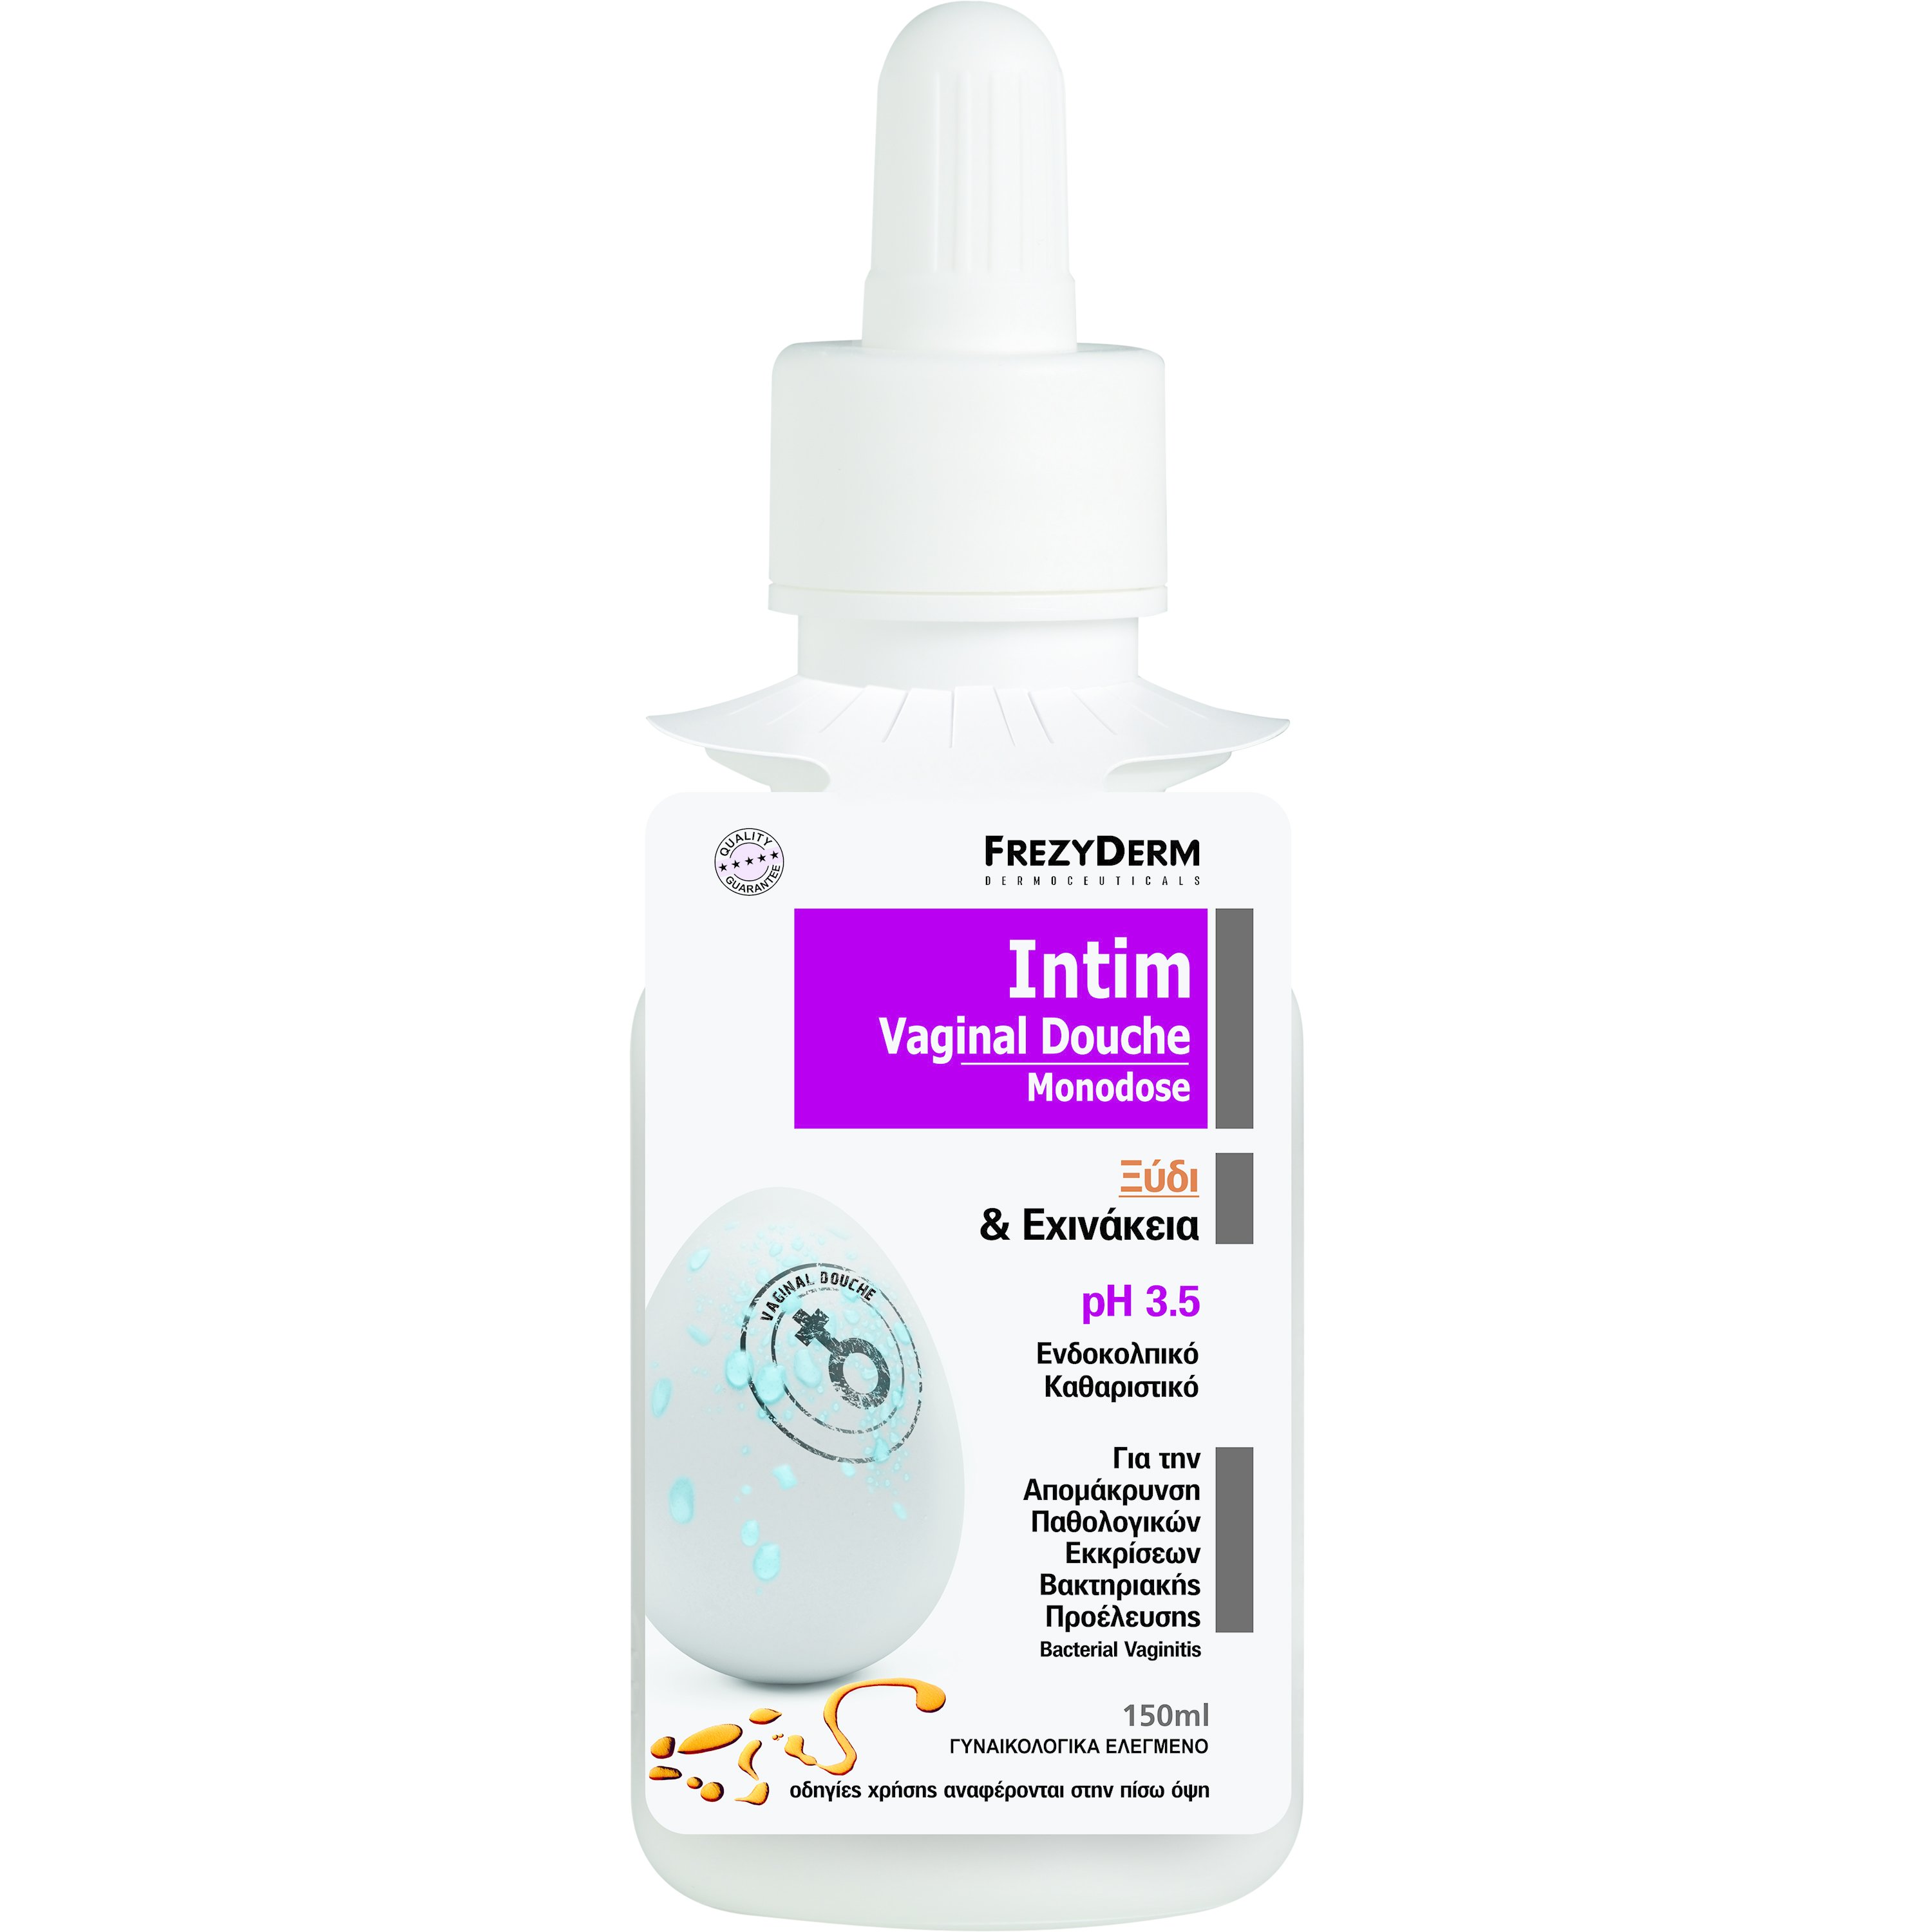 Intim Vaginal Douche Monodose pH 3.5, 150ml – Frezyderm,Διάλυμα Κολπικής Πλύσης σε Μονοδόση